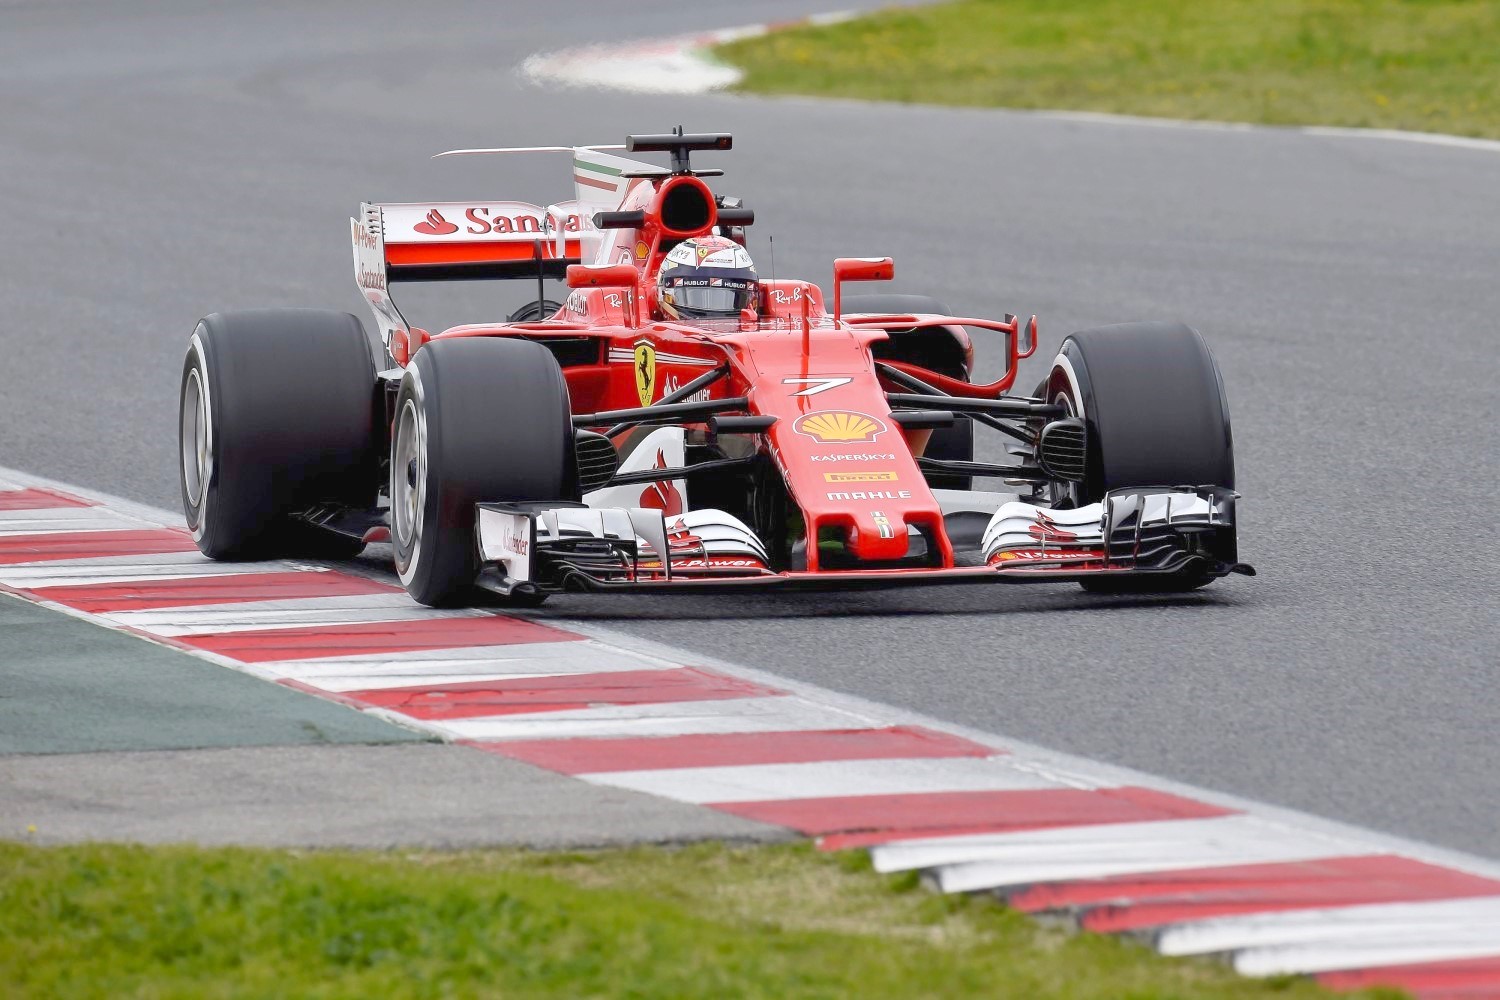 Kimi Raikkonen's Ferrari appears quick at Barcelona 